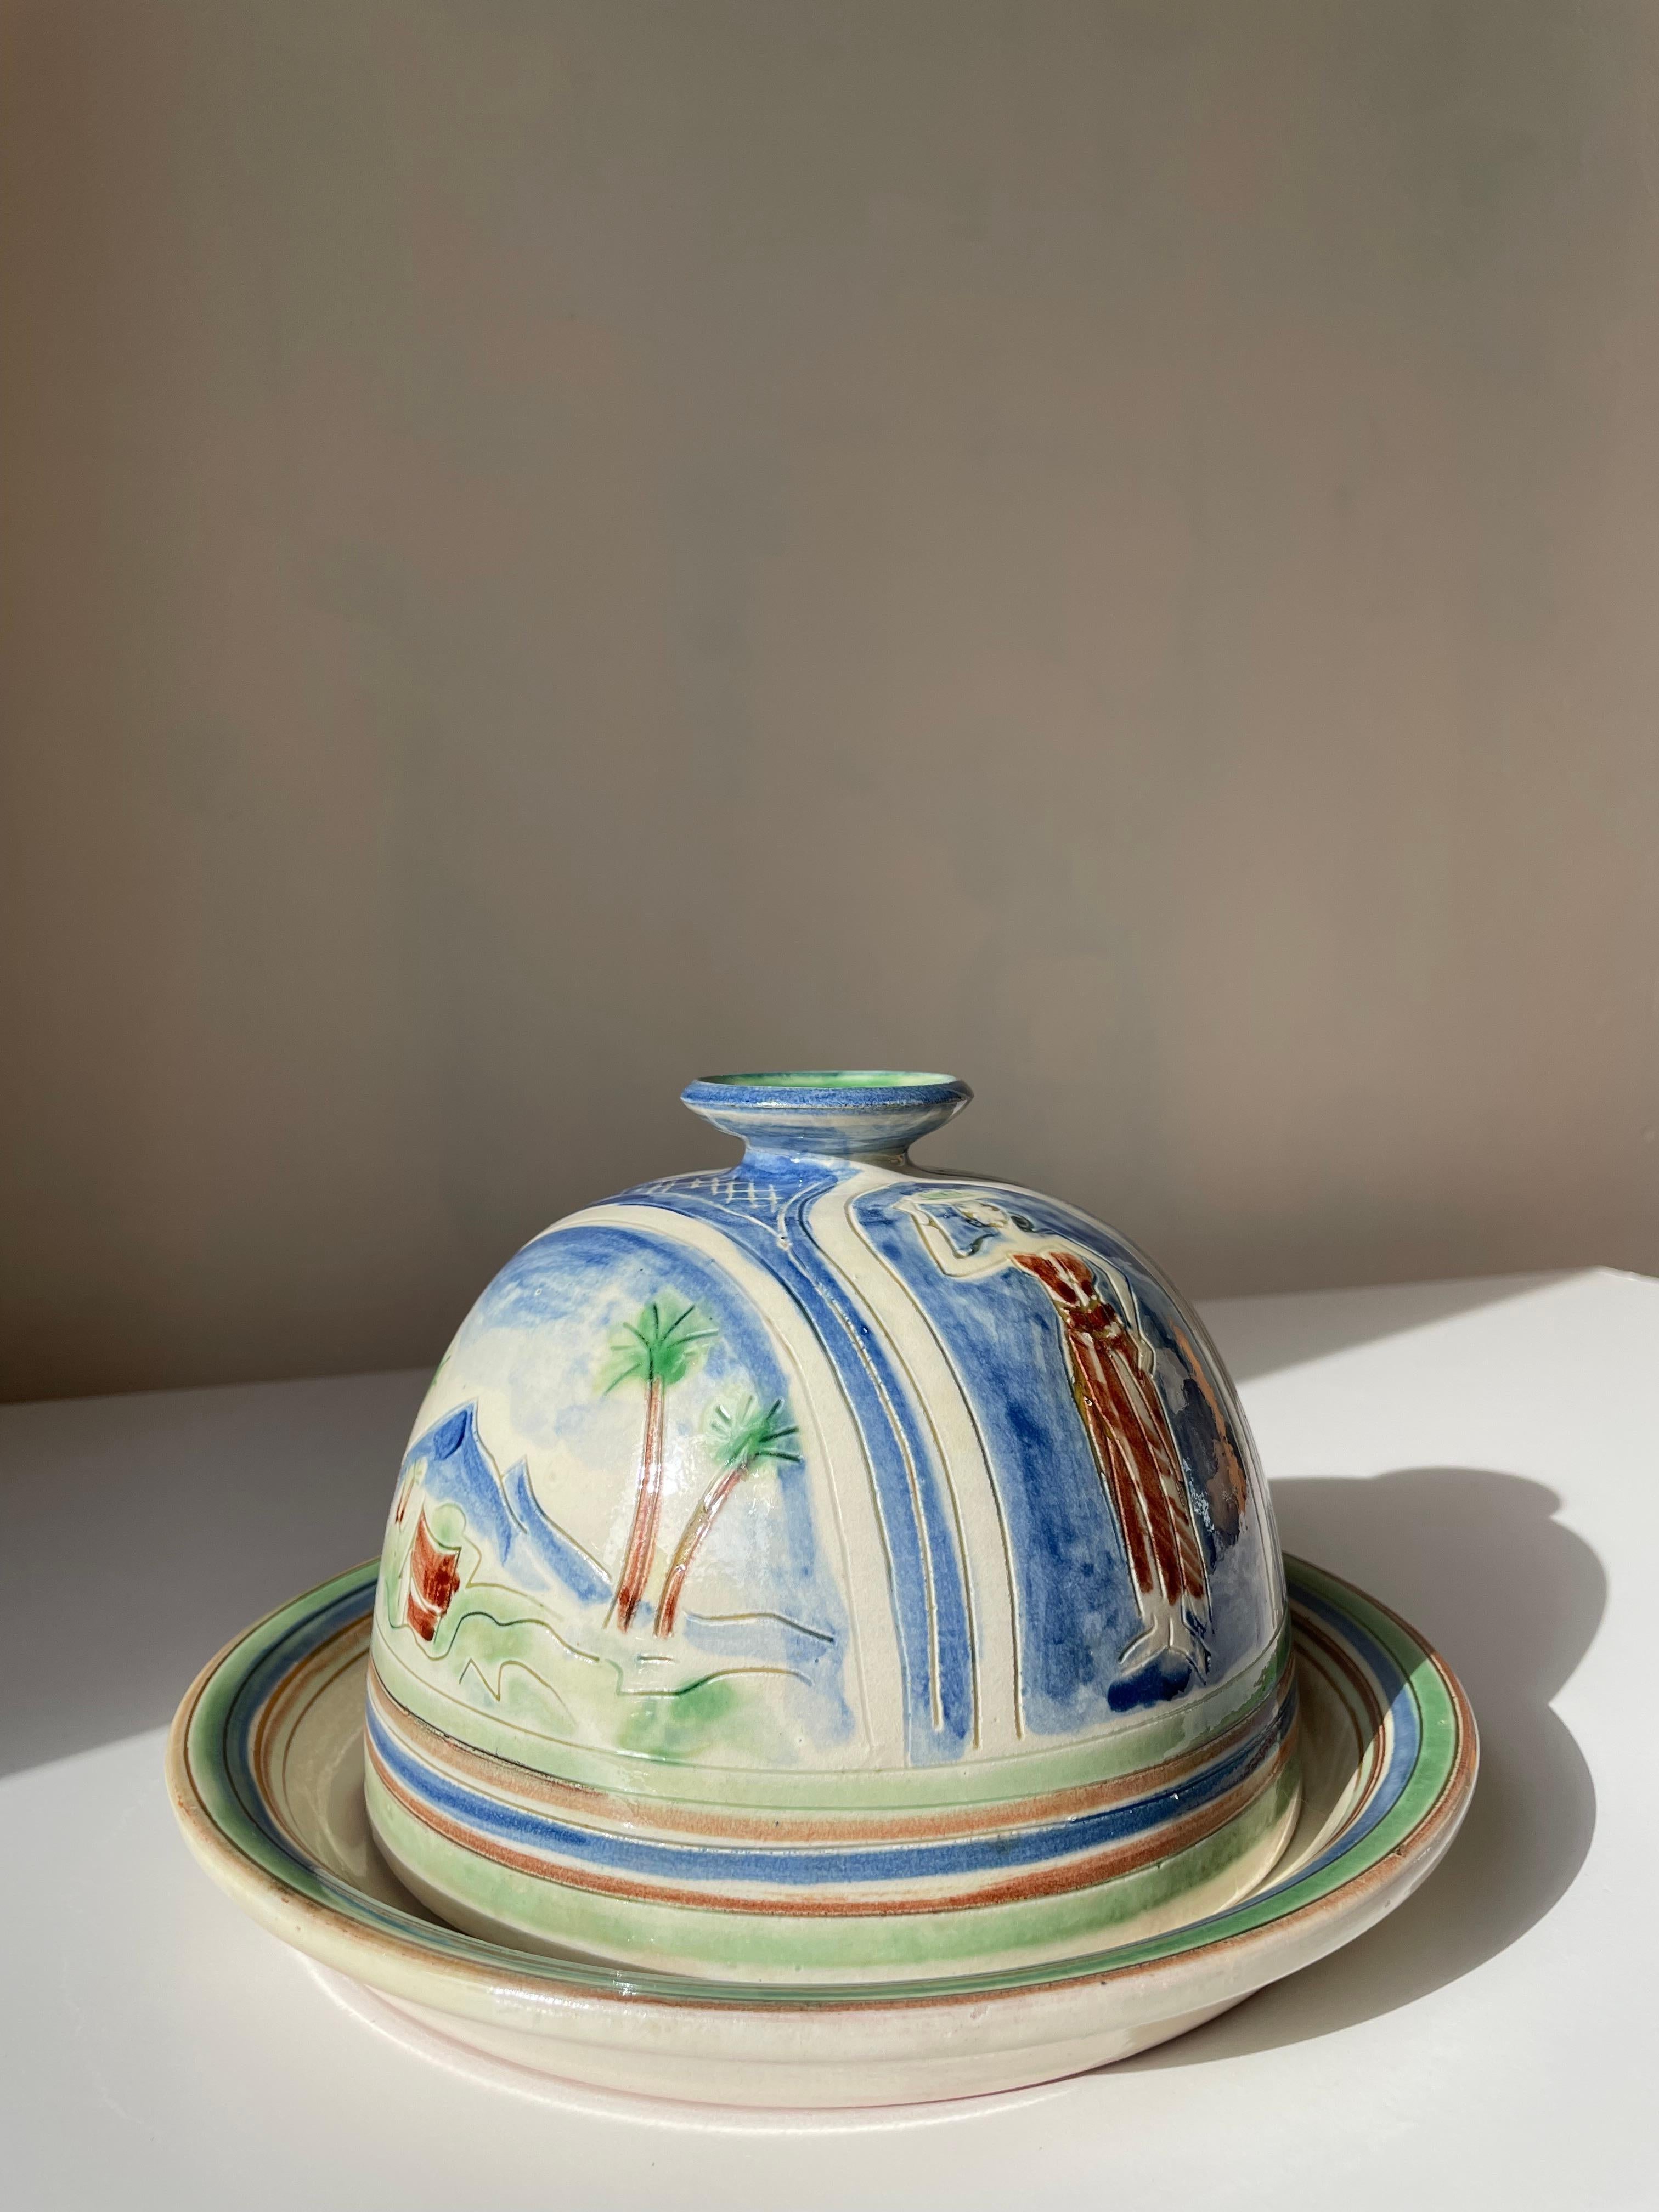 Handmade Danish 1950s Tropic Decor Ceramic Dome And Plate For Sale 2